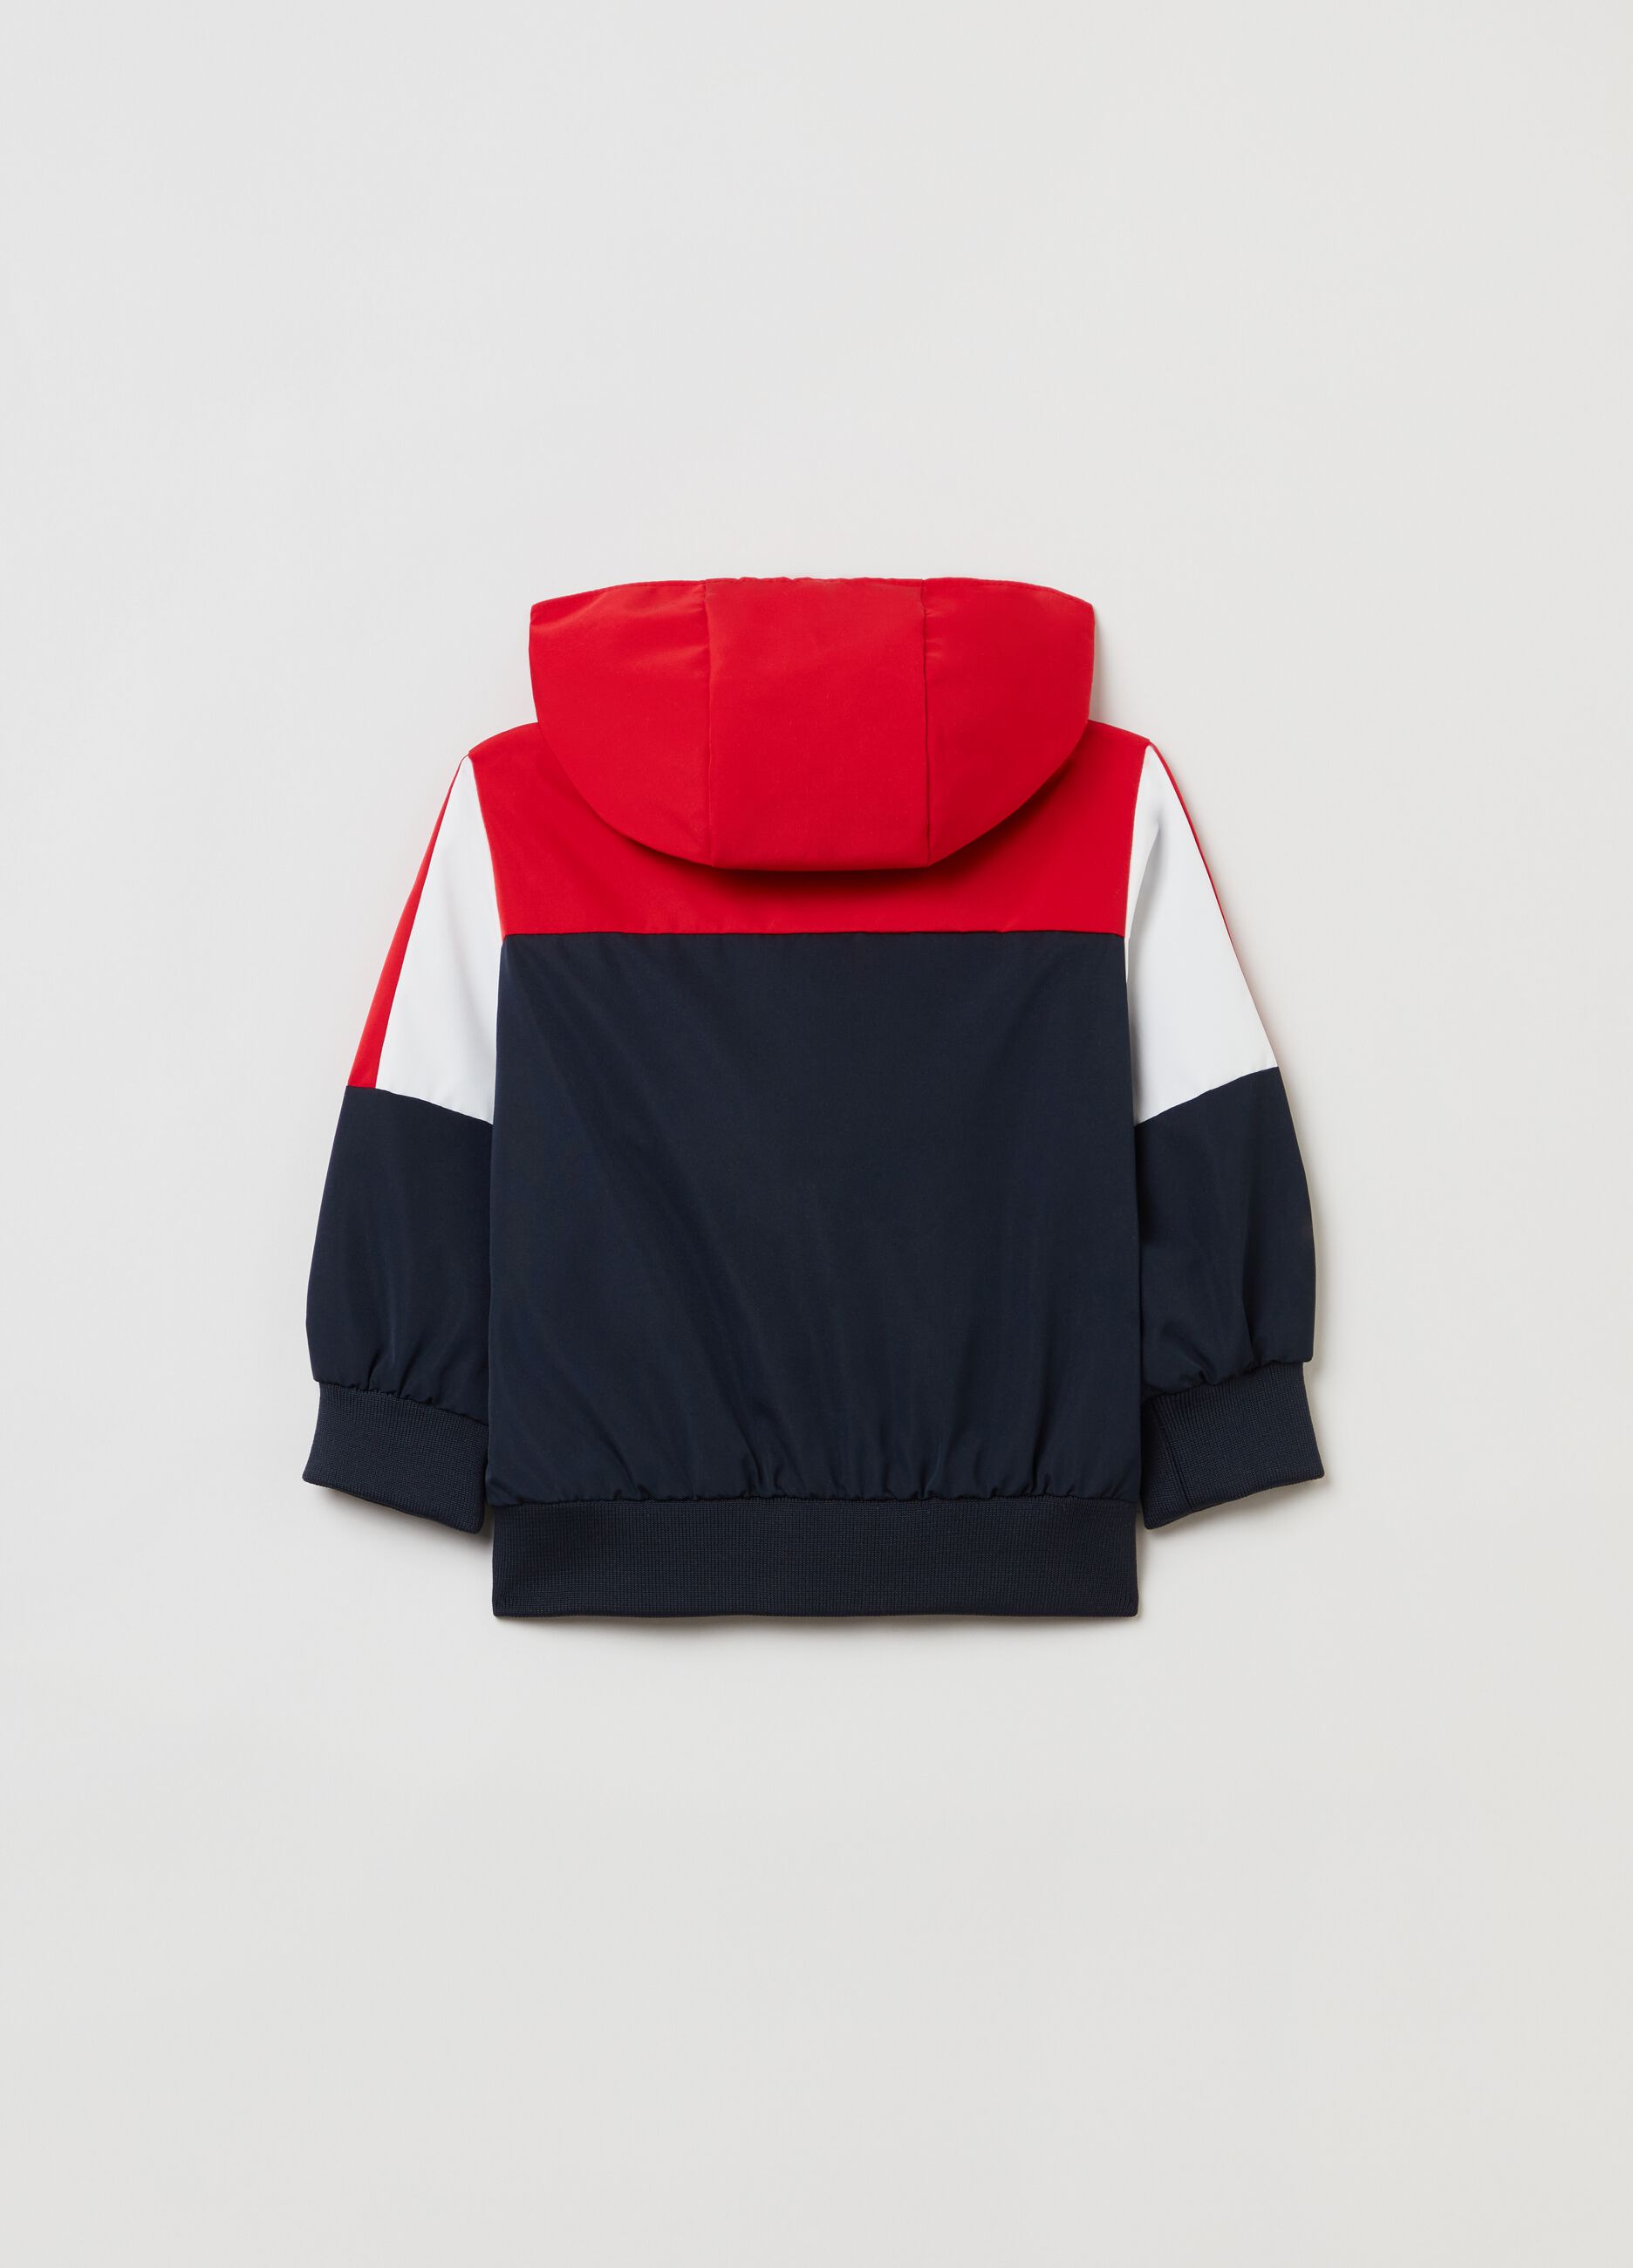 Colourblock full-zip sweatshirt with hood